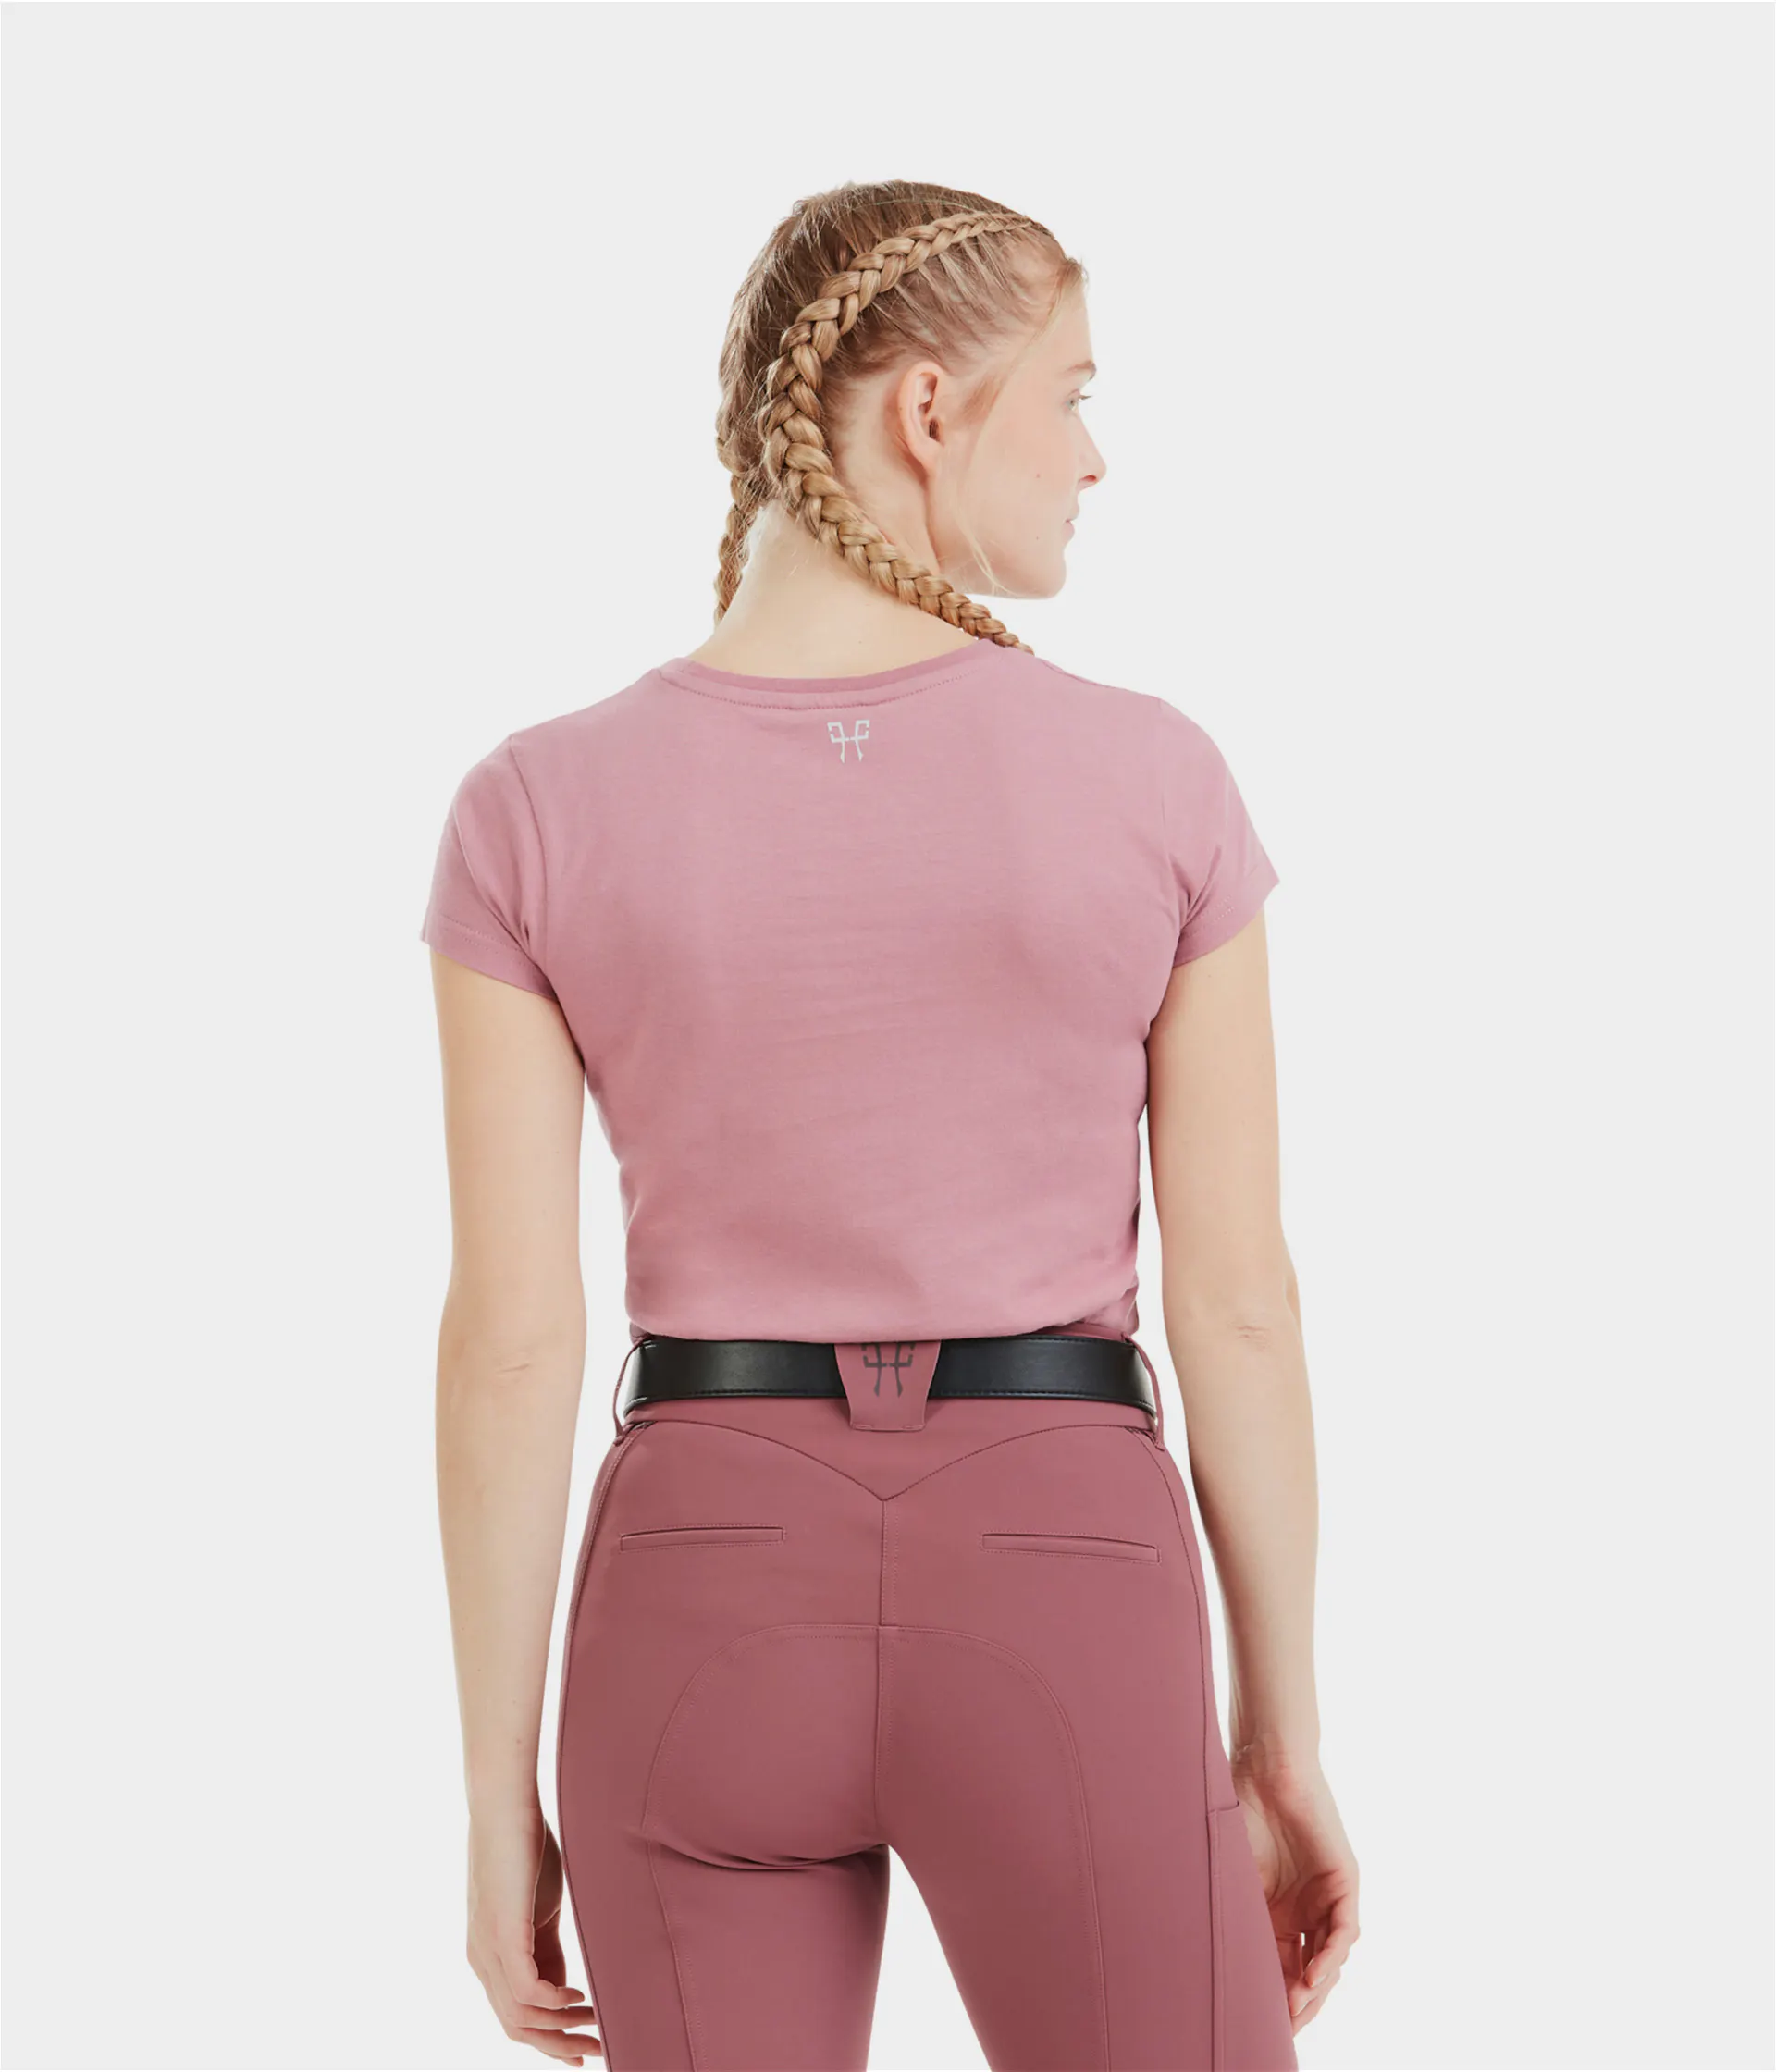 tee-shirt équitation femme horse pilot team couleur rose